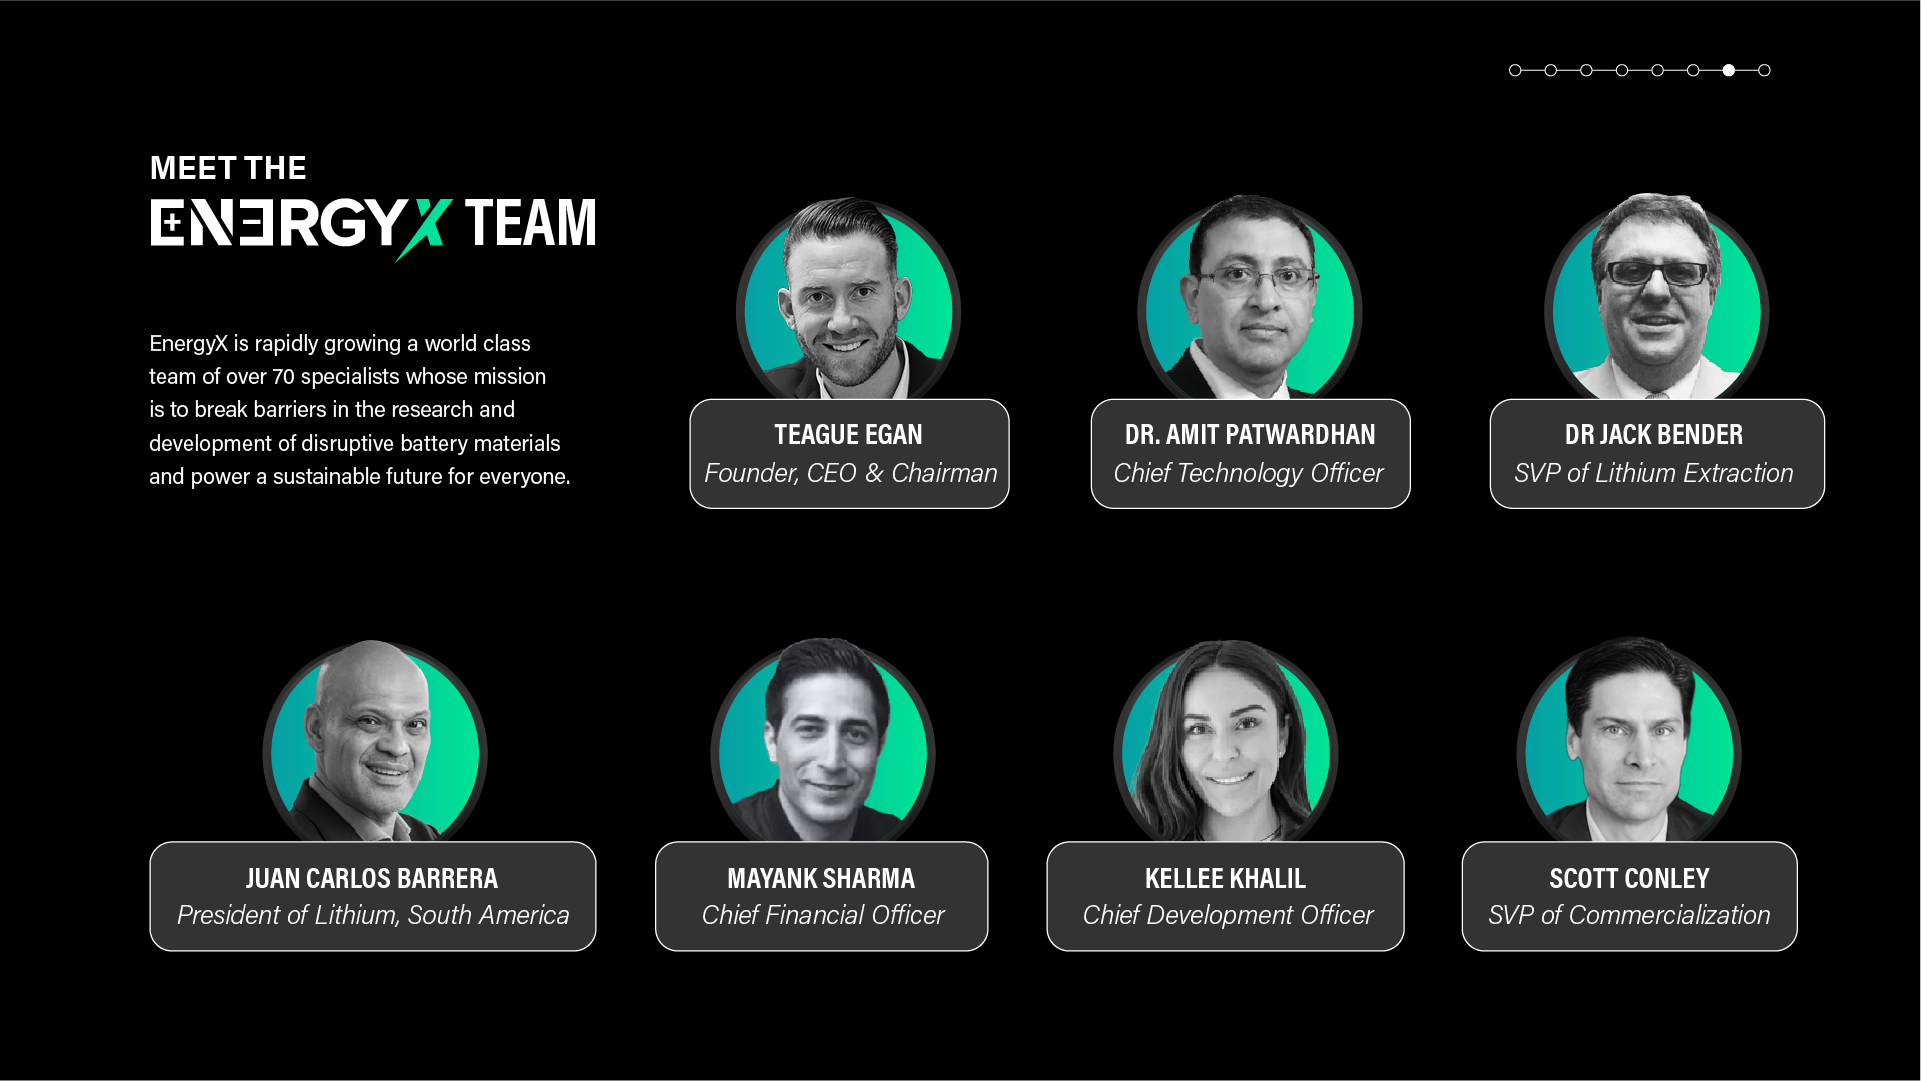 Graphic showing key members of EnergyX team.